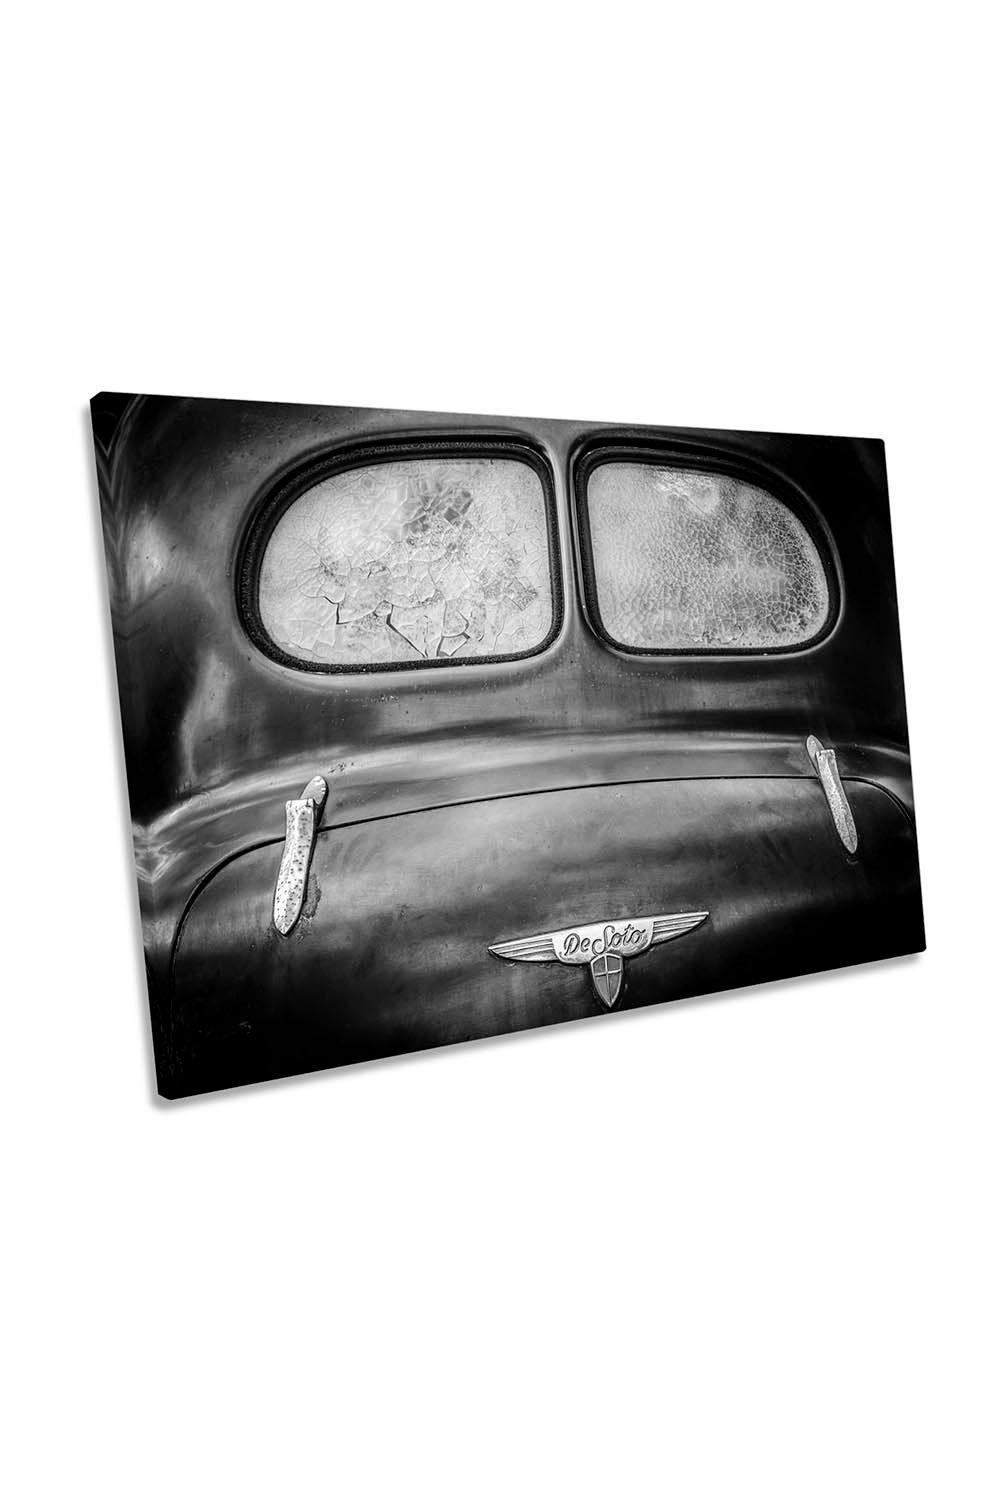 DeSoto Classic Vintage Car Canvas Wall Art Picture Print